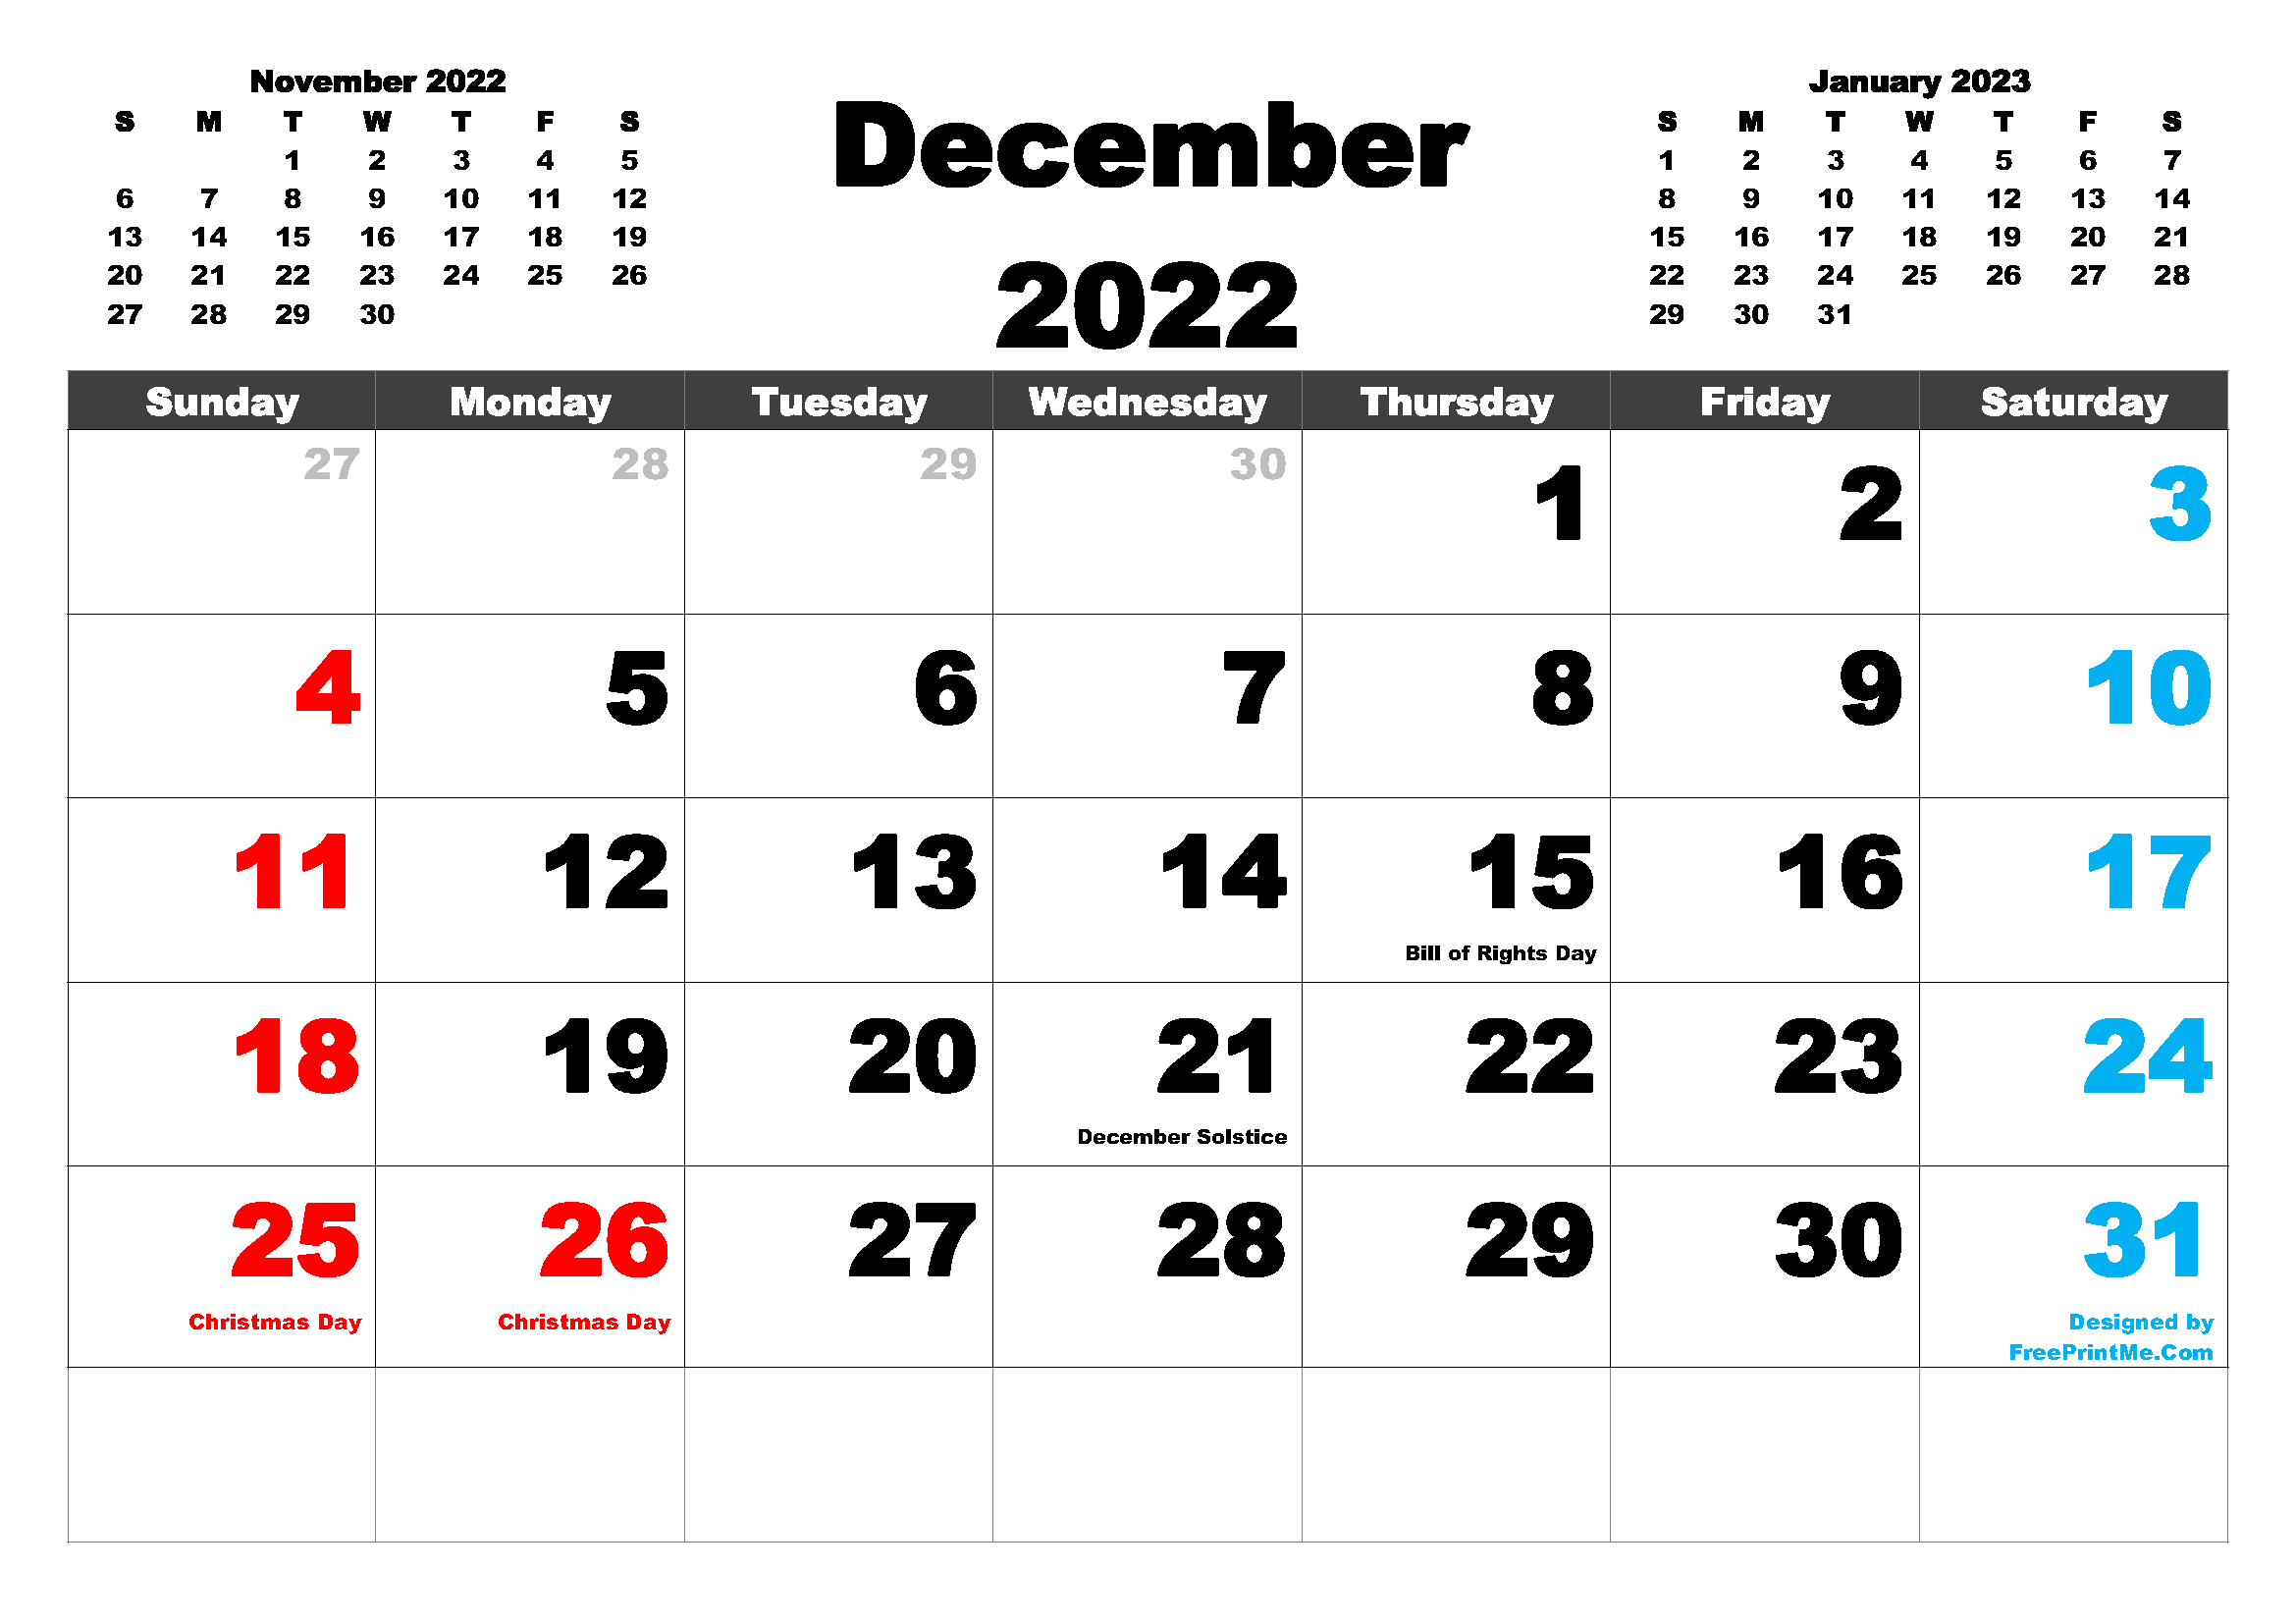 December Calendar For 2022 Free Printable December 2022 Calendar Pdf, Png Image